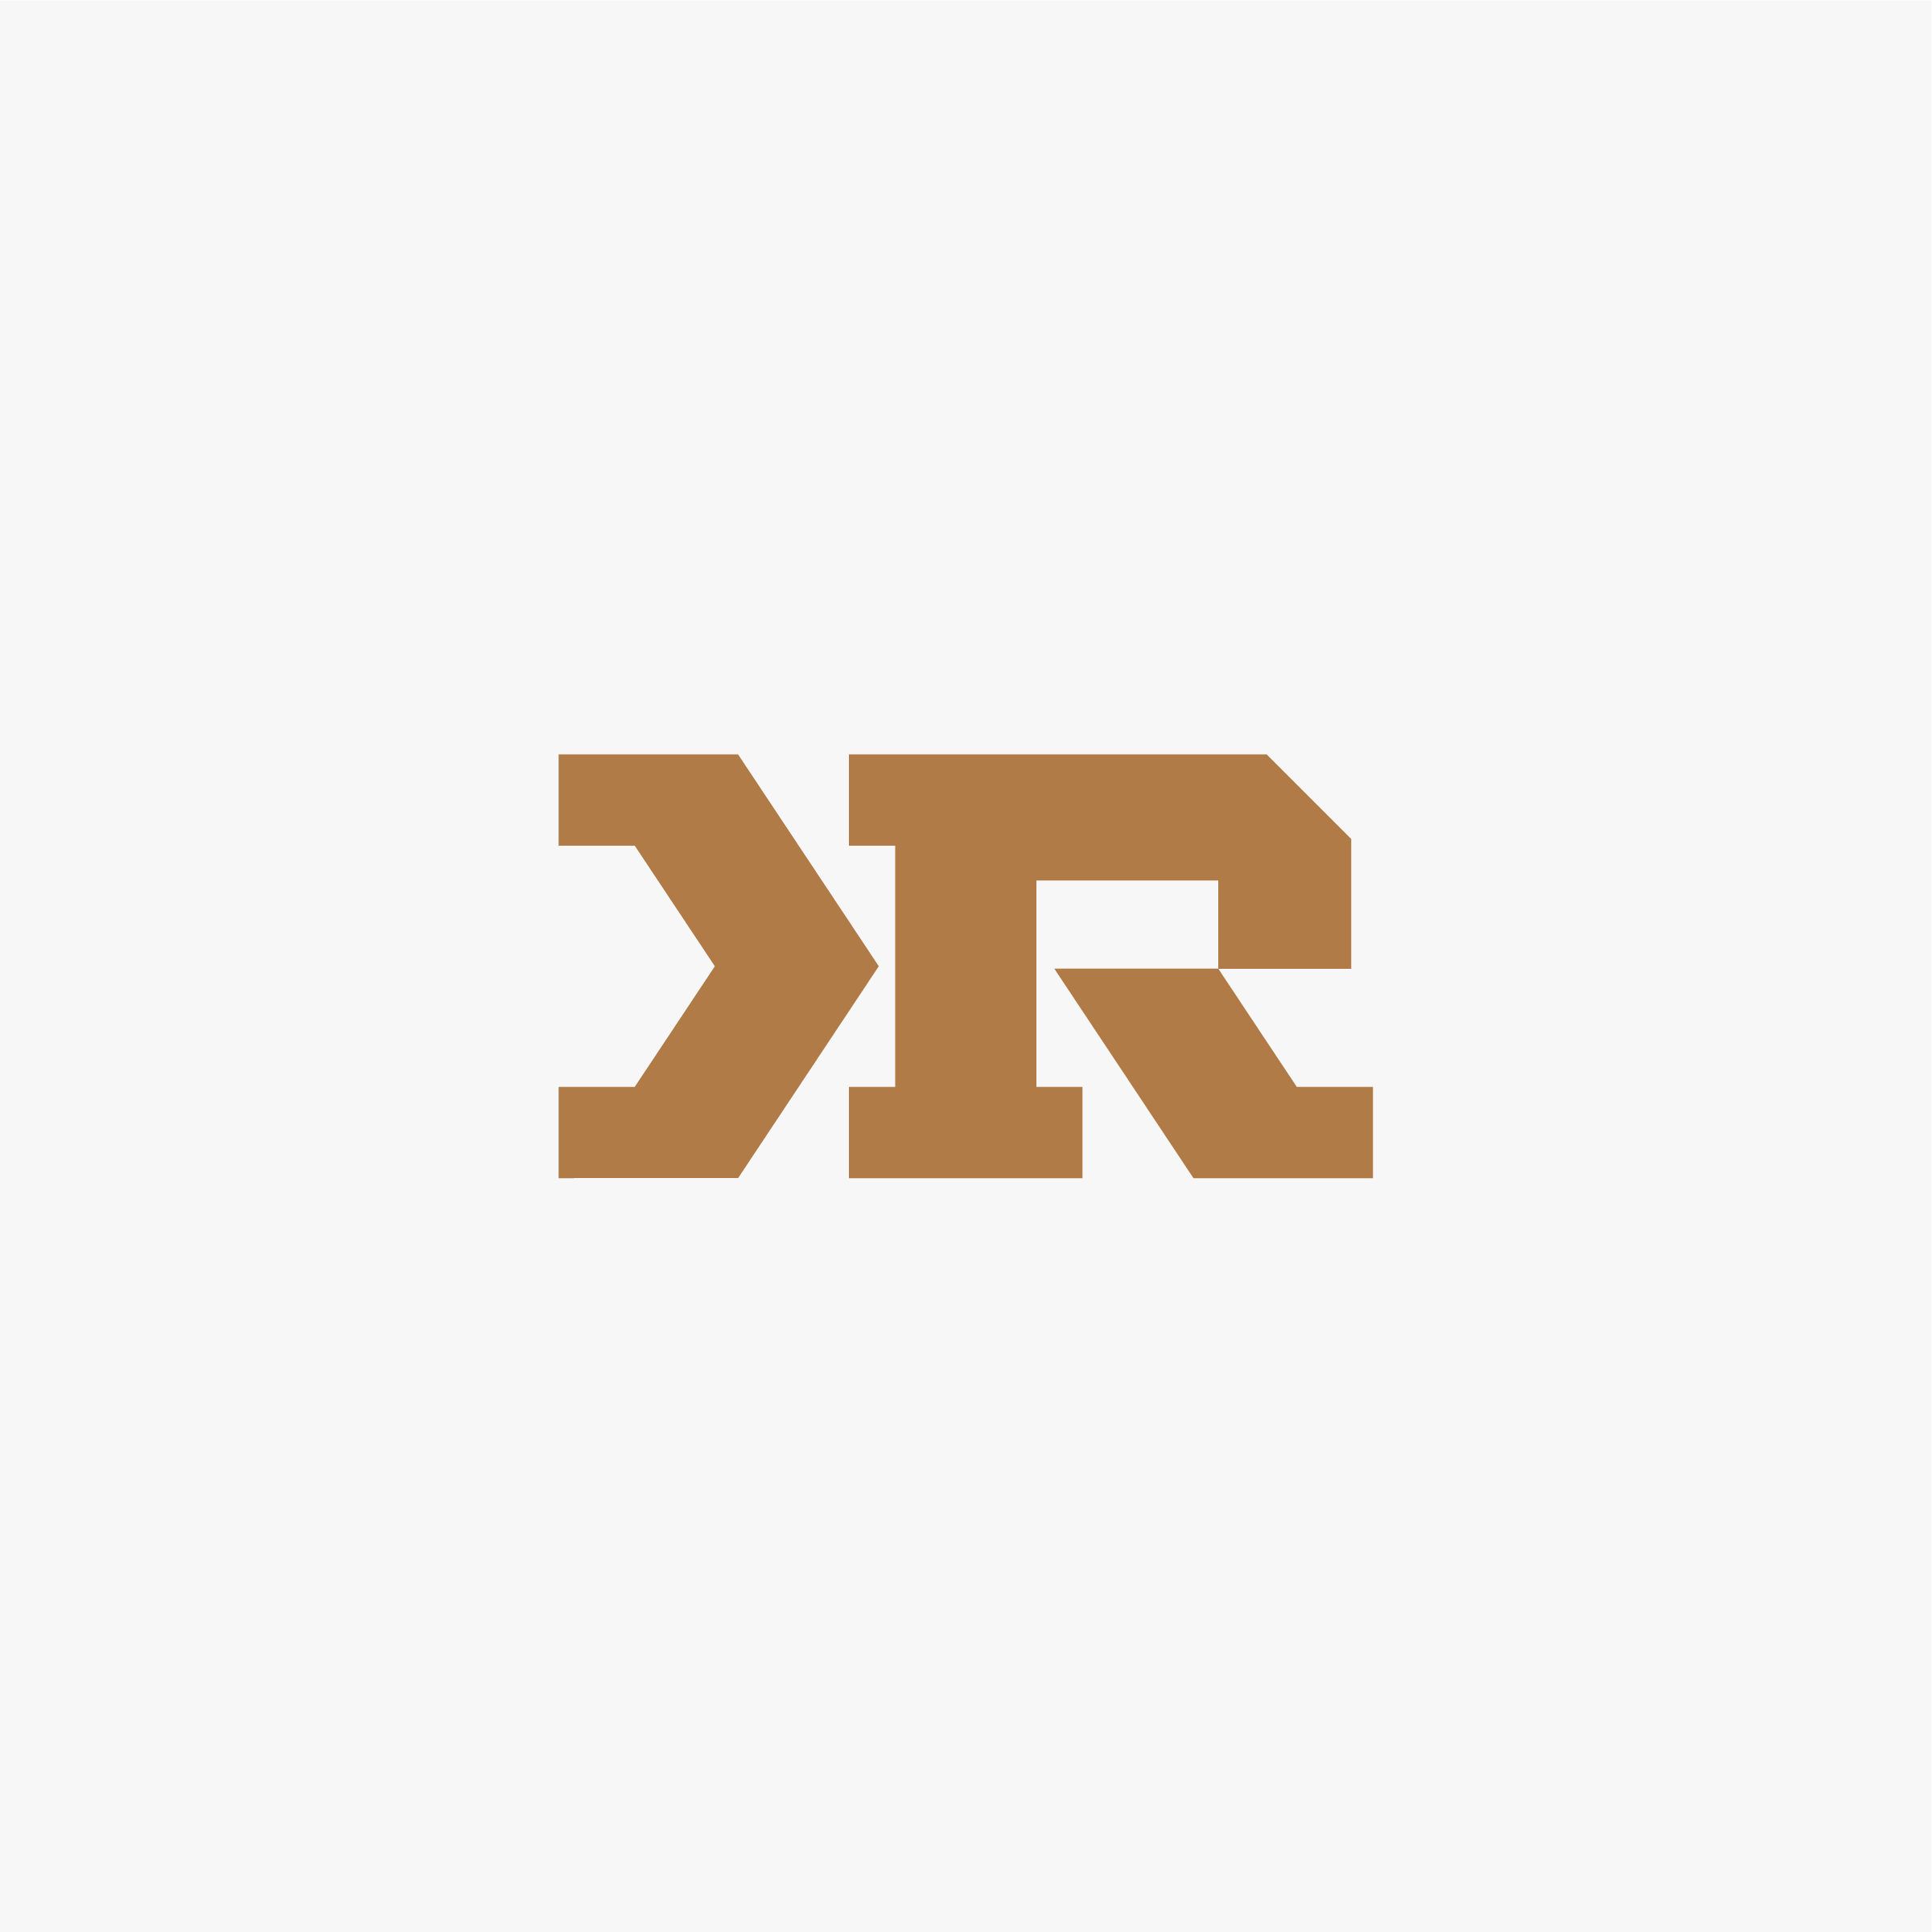 KR+Monogram logo design by logo designer Mirka+Studios for your inspiration and for the worlds largest logo competition